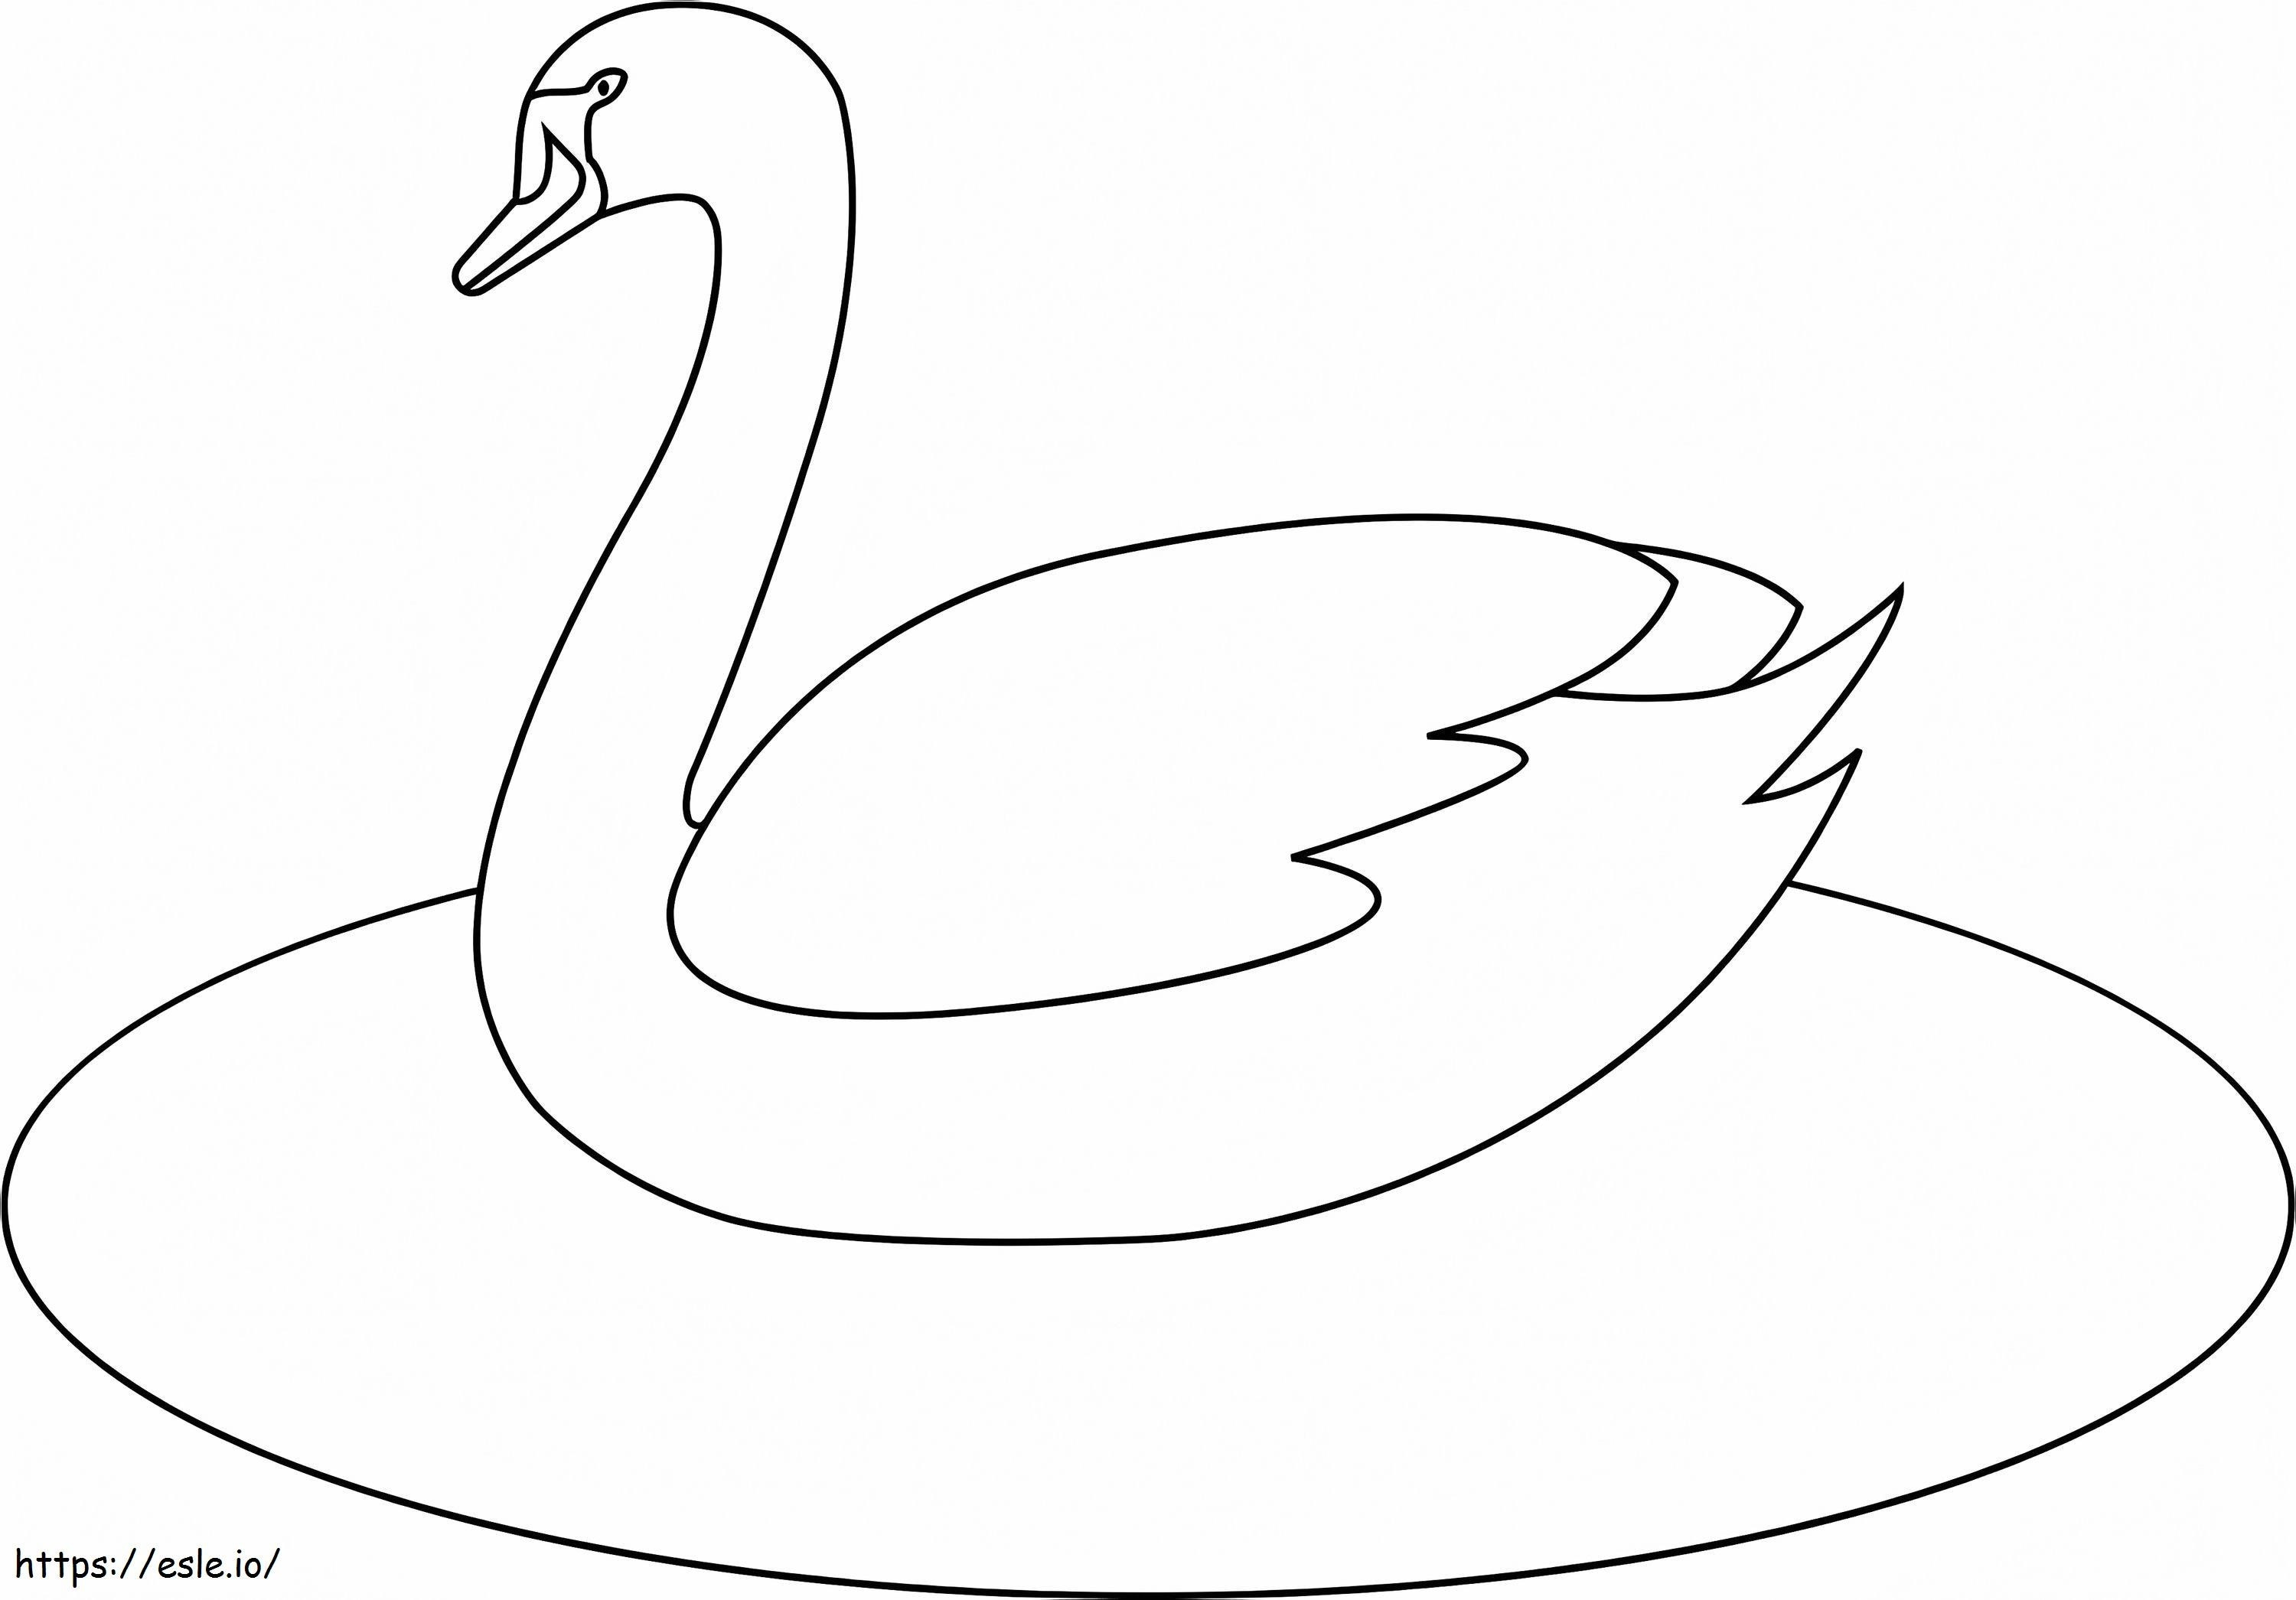 Cisne Simples para colorir